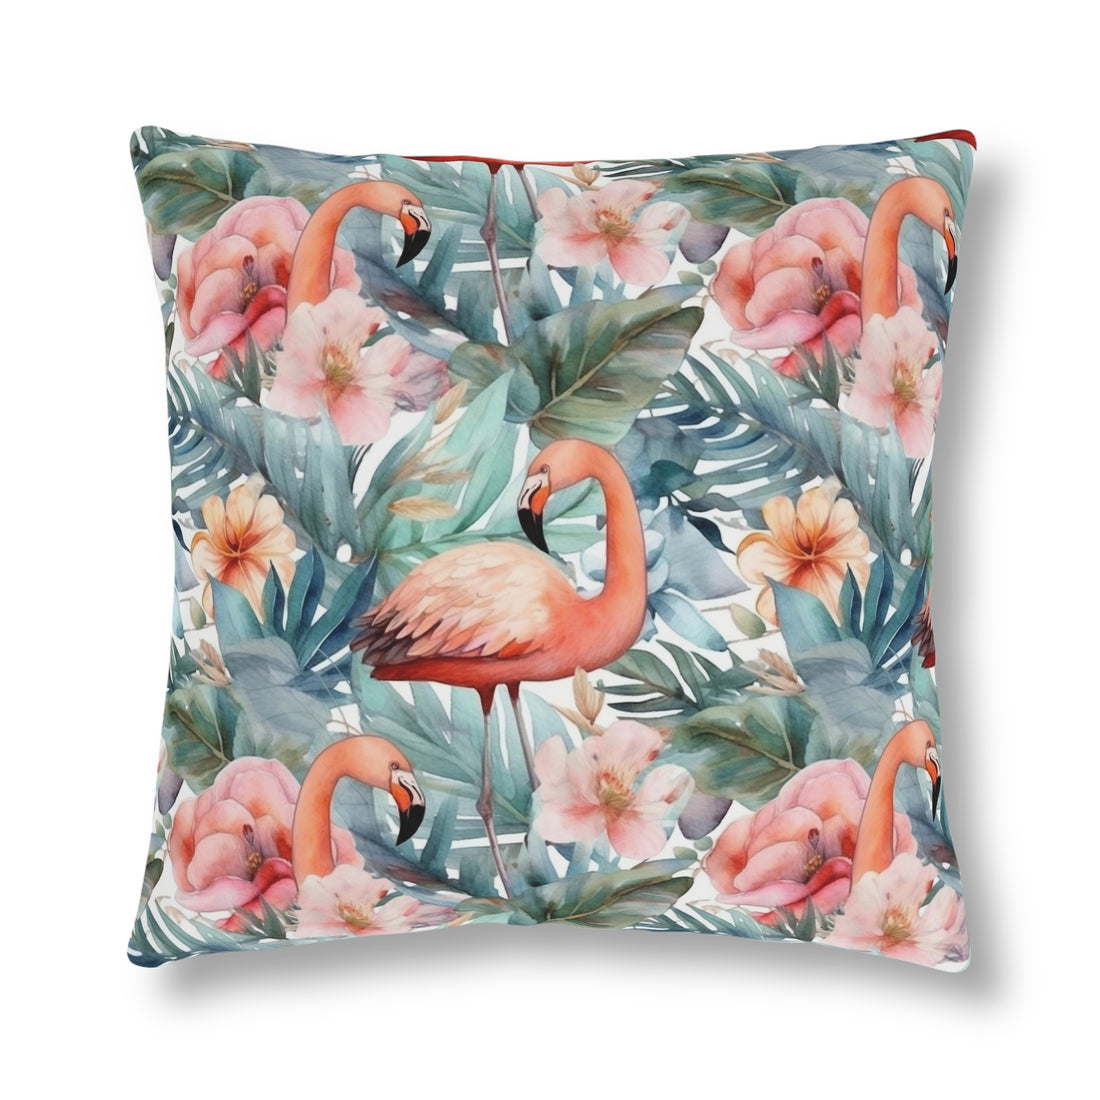 Flight of the Flamingo Waterproof Pillows